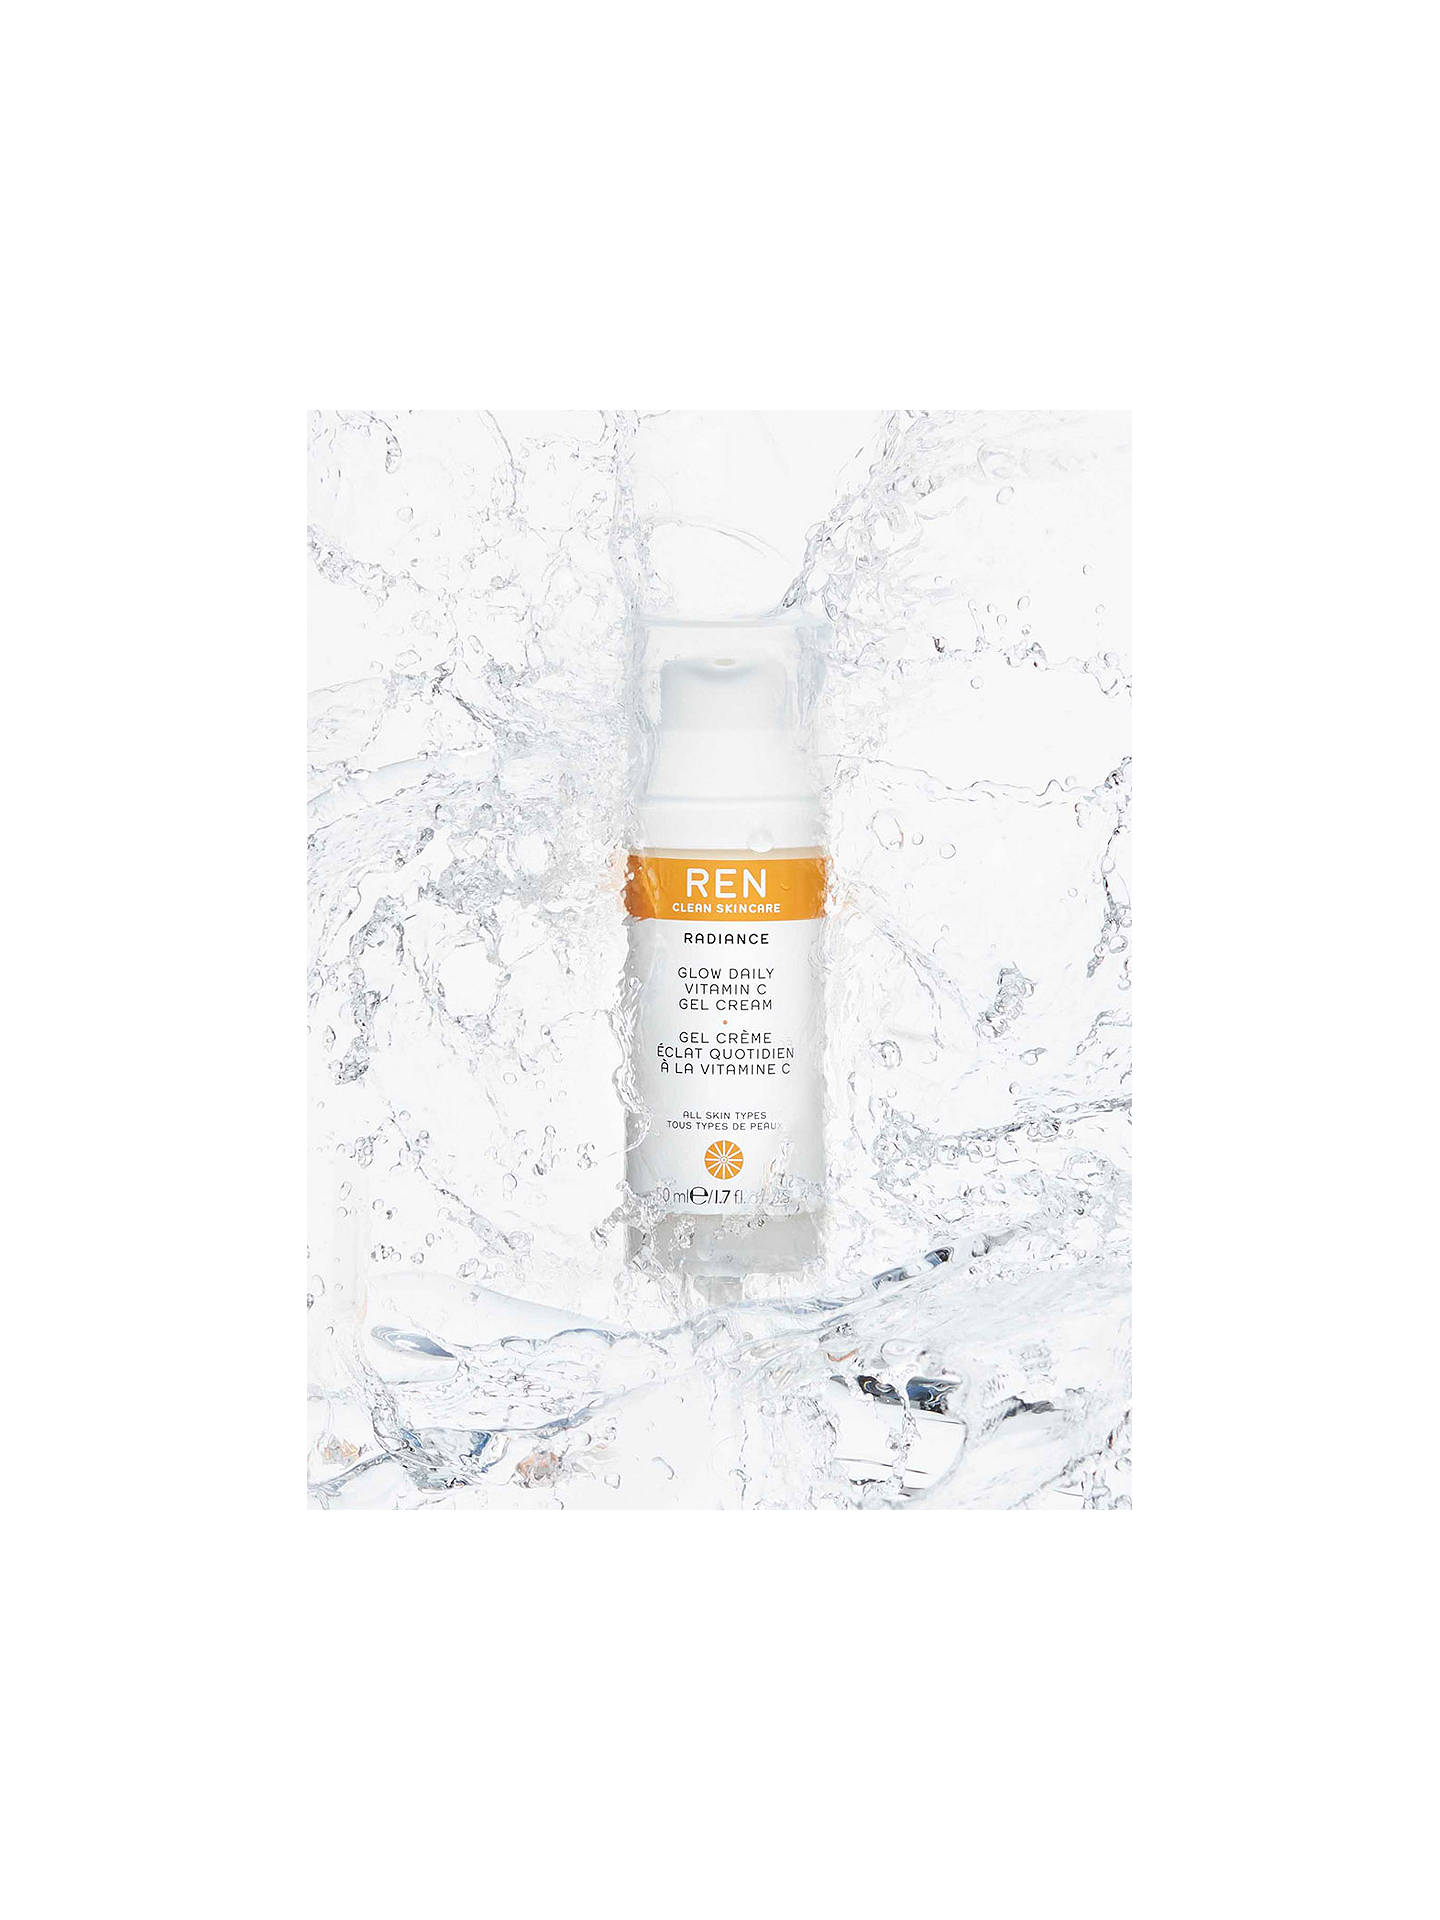 Ren Clean Skincare Radiance Glow Daily Vitamin C Gel Cream 50ml At John Lewis Partners